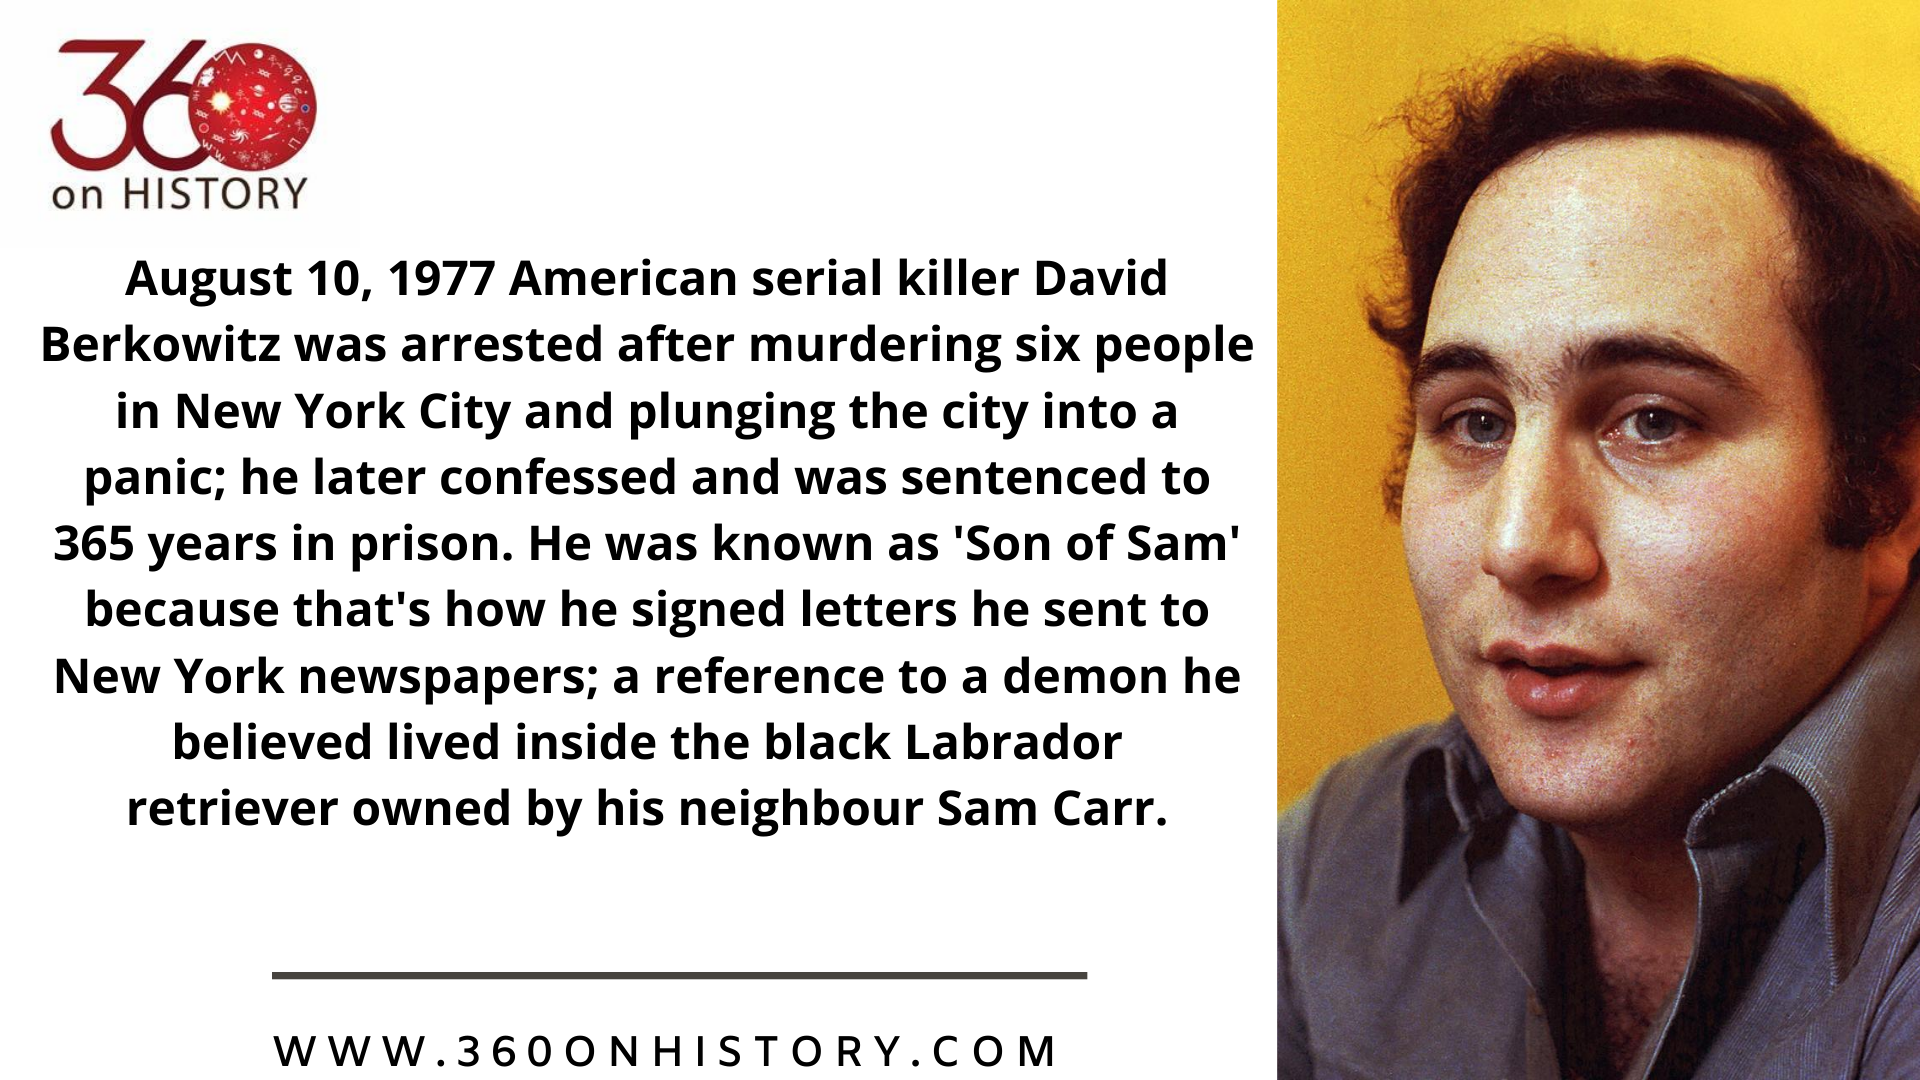 Son of Sam (David Berkowitz) was arrested on August 10, 1977